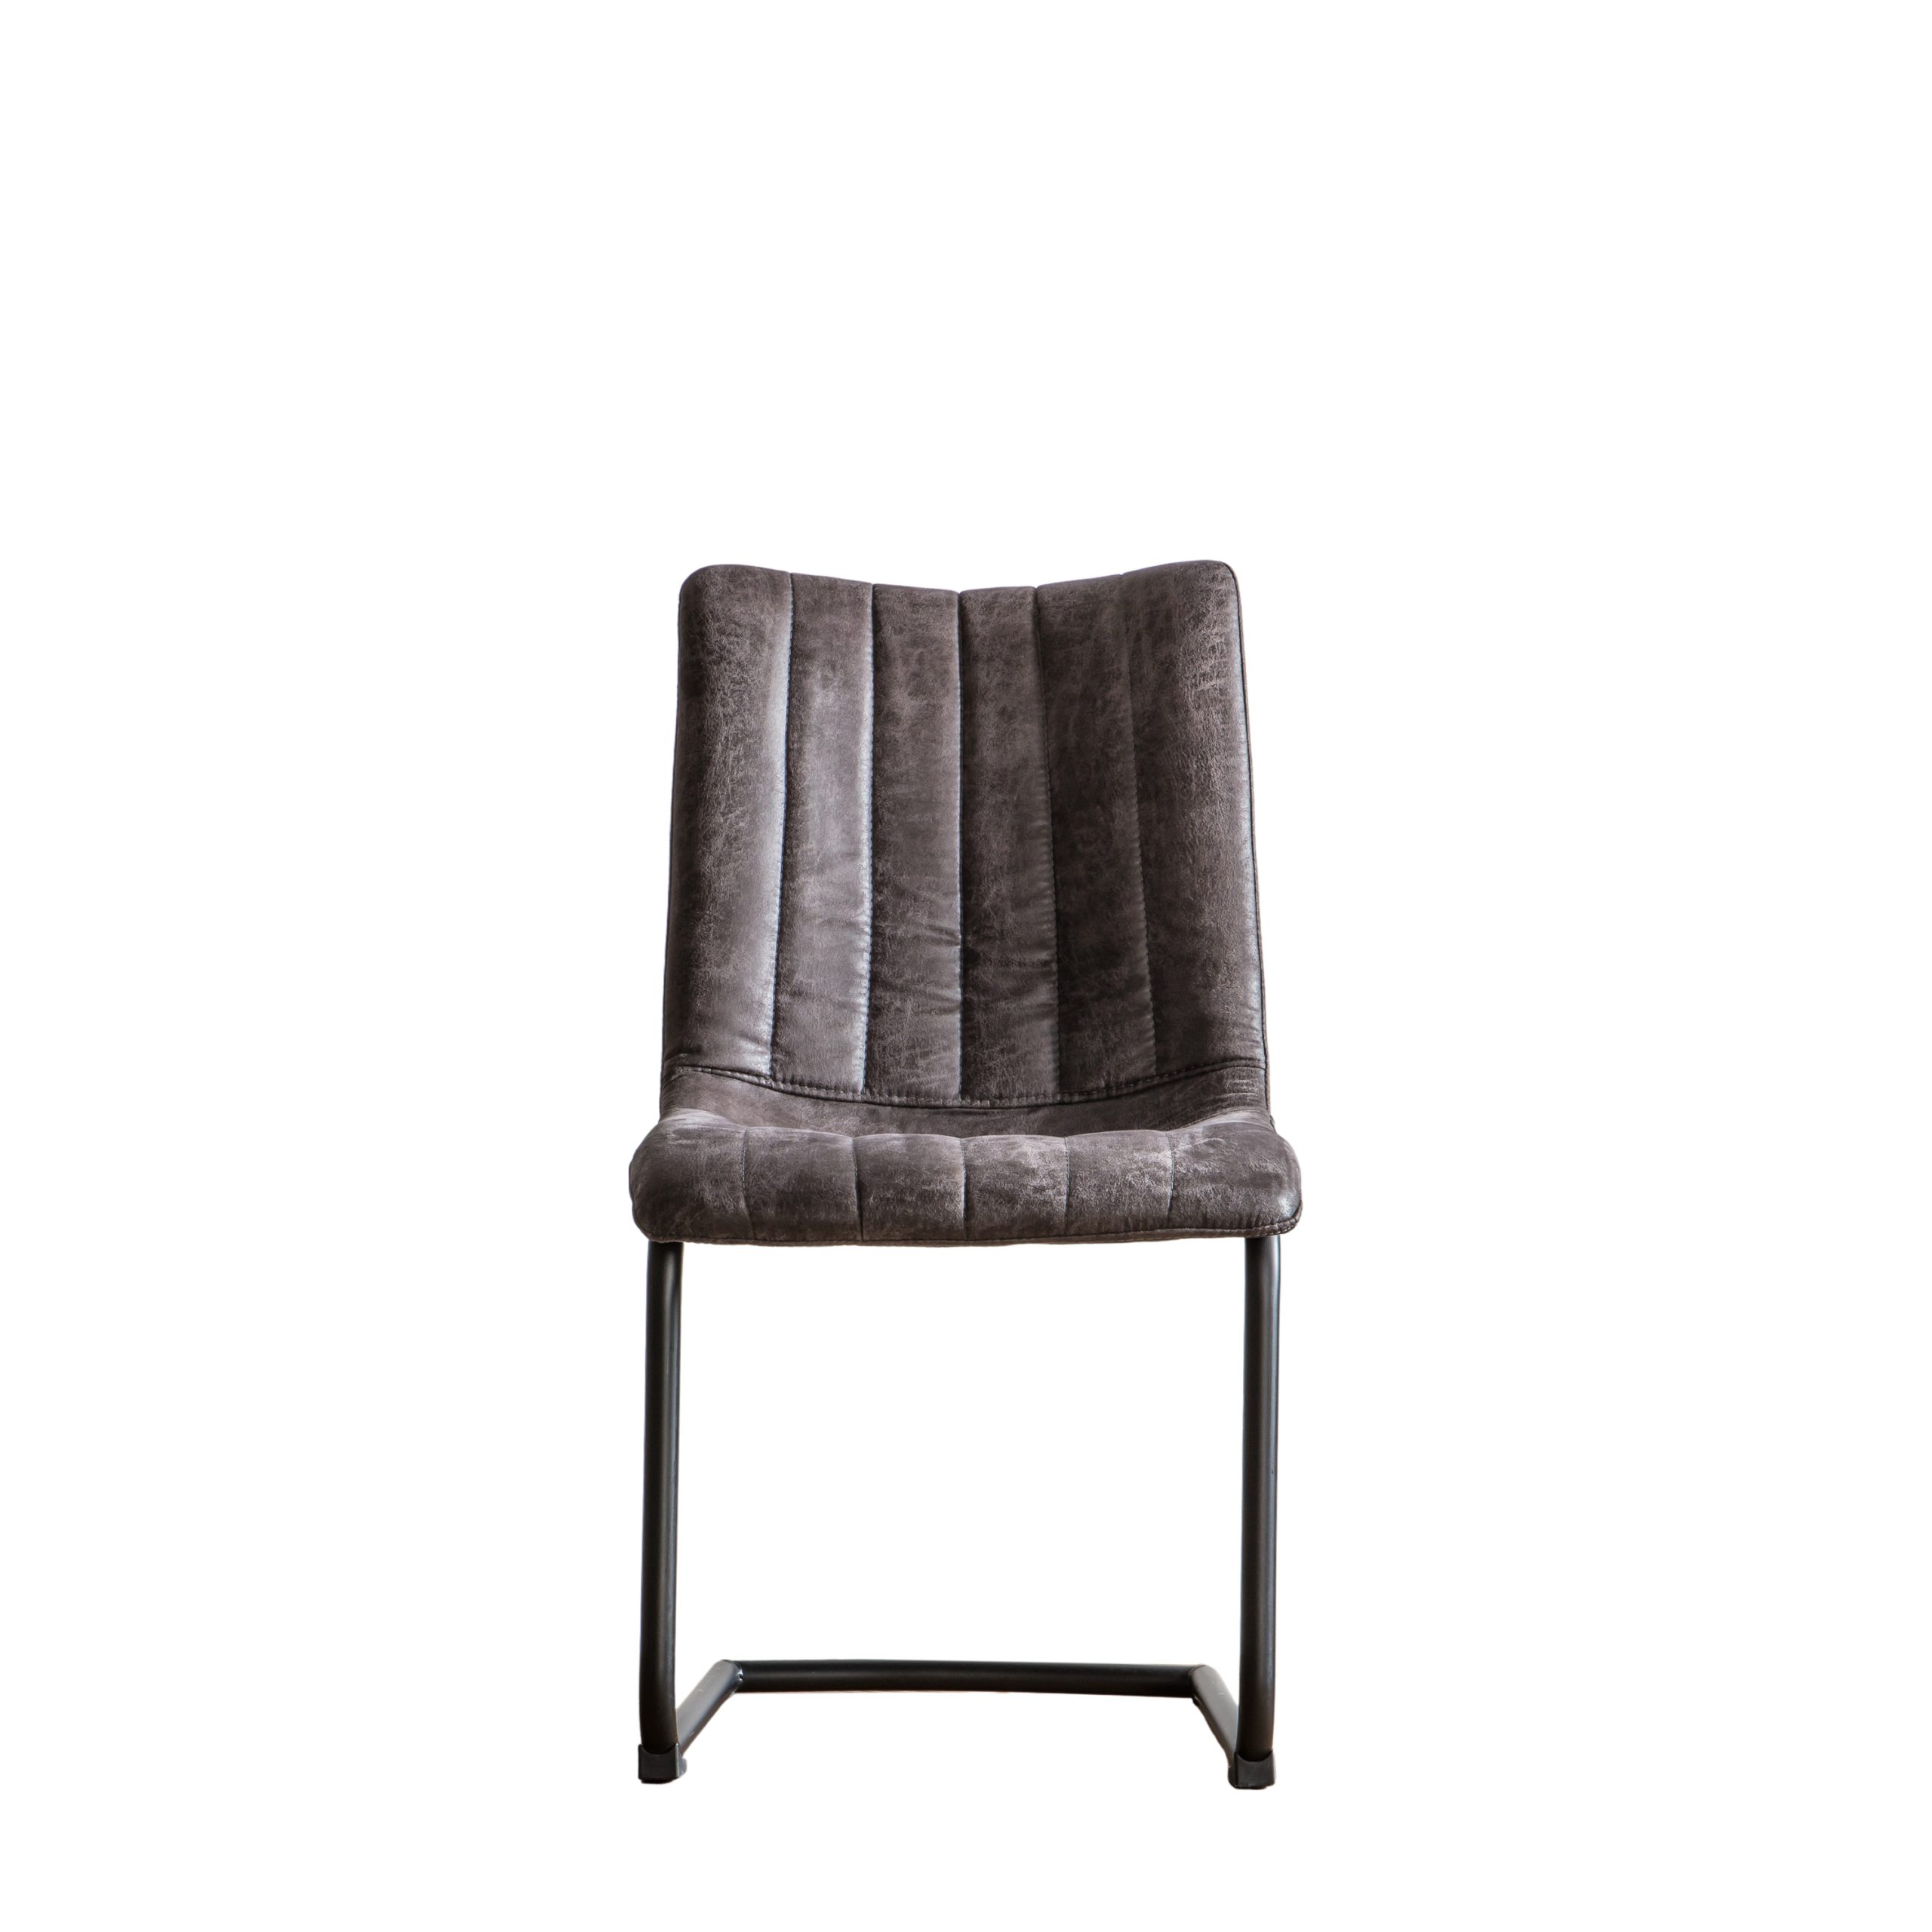 Gallery Direct Edington Grey Chair (Set of 2)